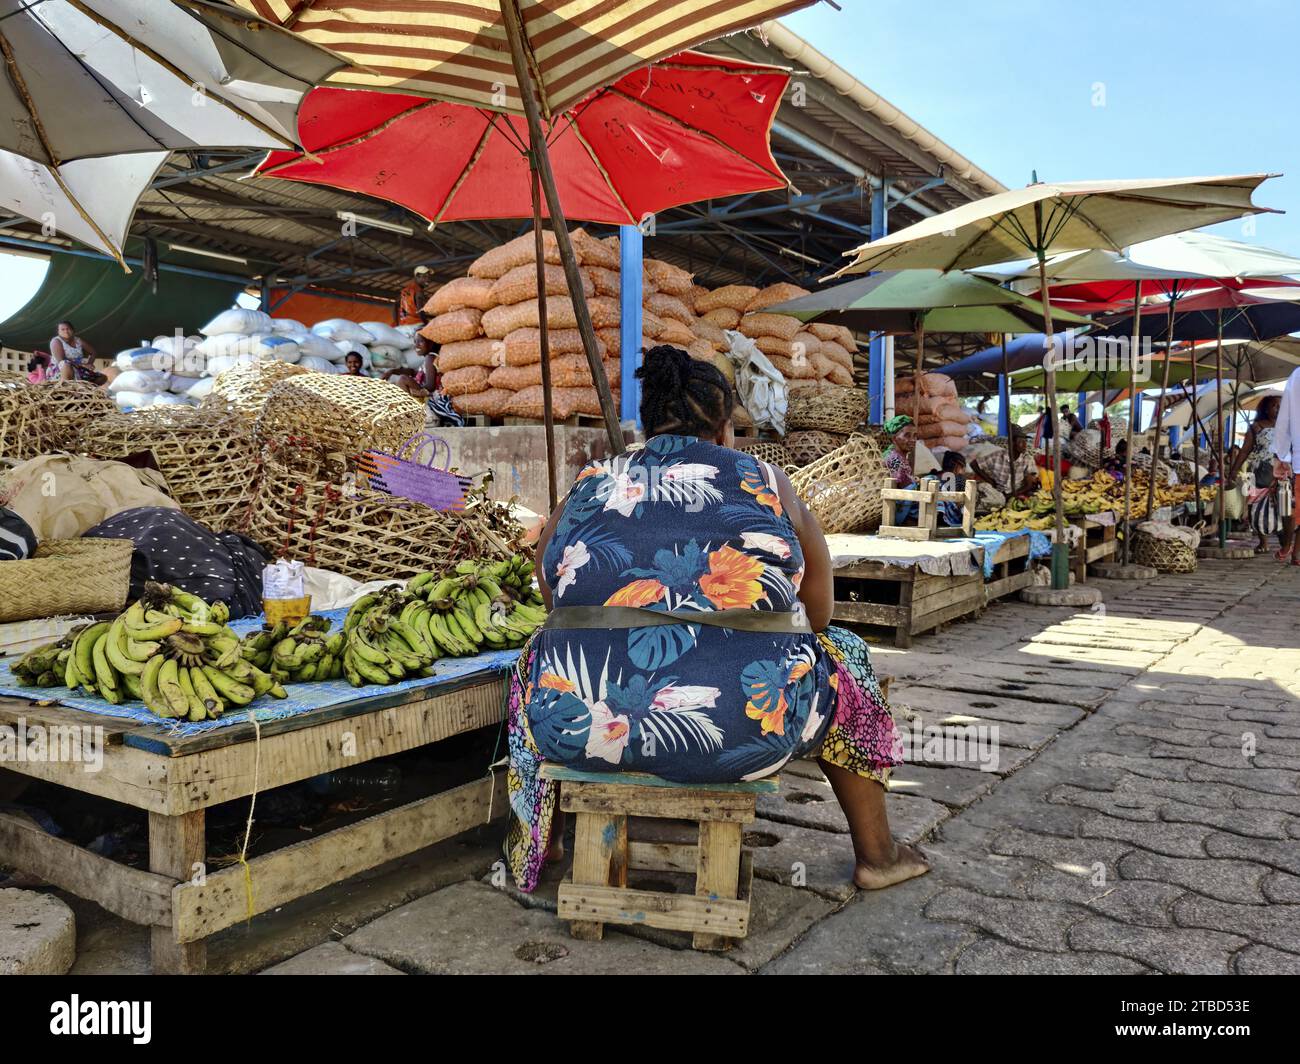 Marché, femme de marché, bananes, parasols, Mahajanga, Madagascar Banque D'Images